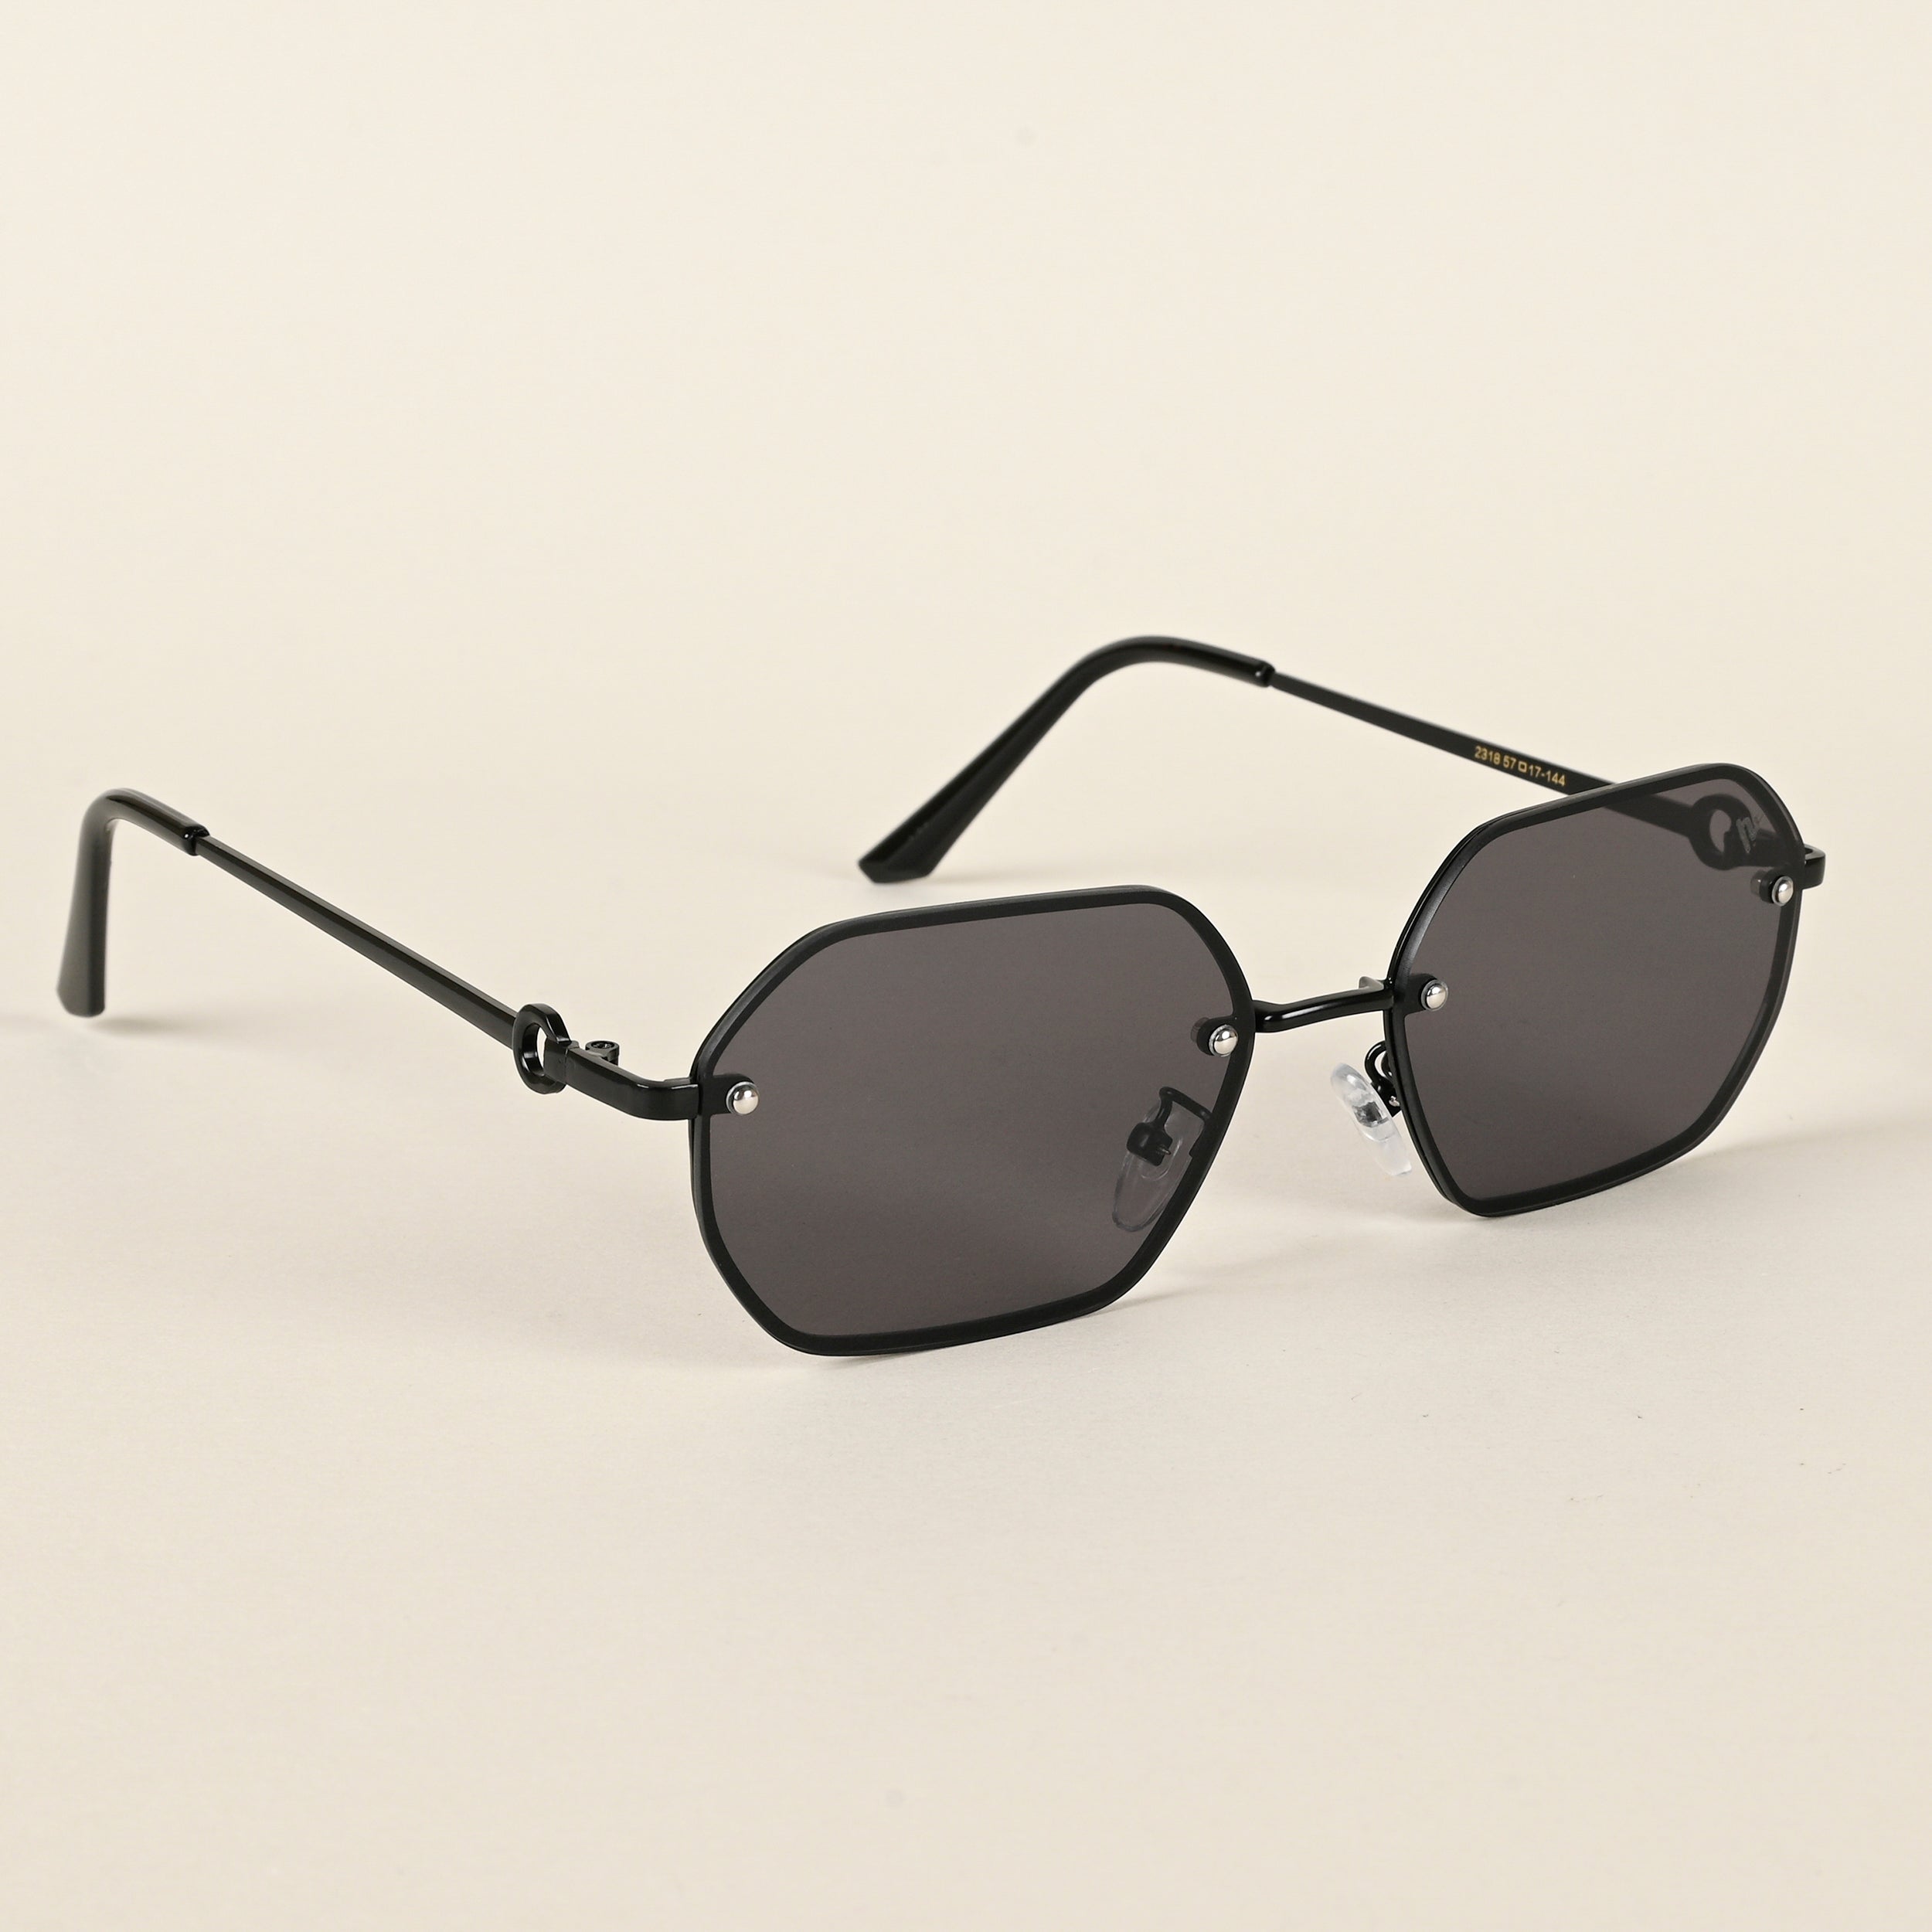 Voyage Black Rectangle Sunglasses for Men & Women - MG4498